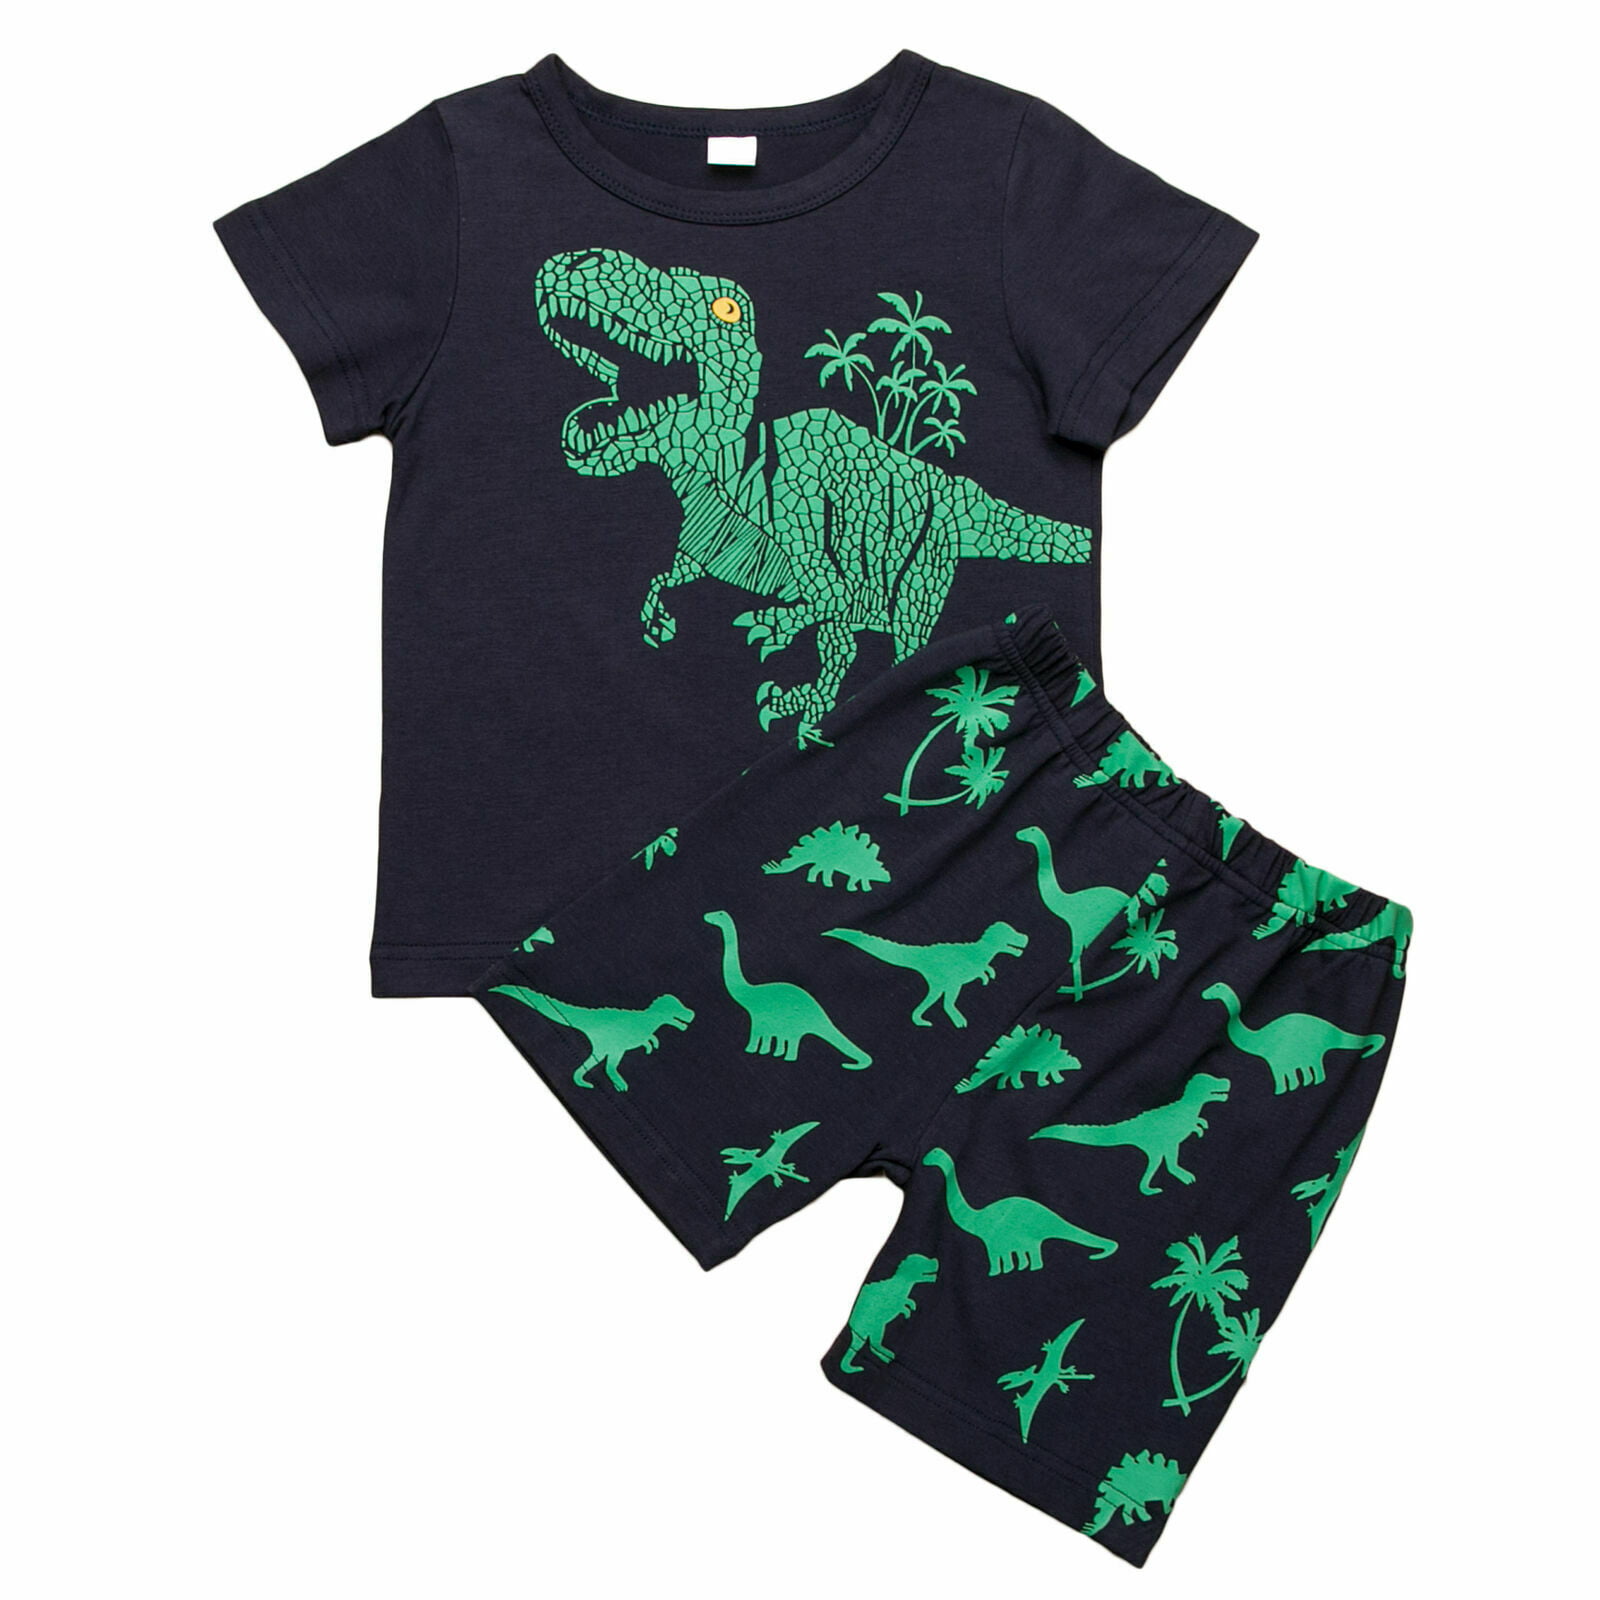 Little Boy Dinosaur Clothing Sets Jogging trousers 2PCS Outfits Toddler Sweatshirt